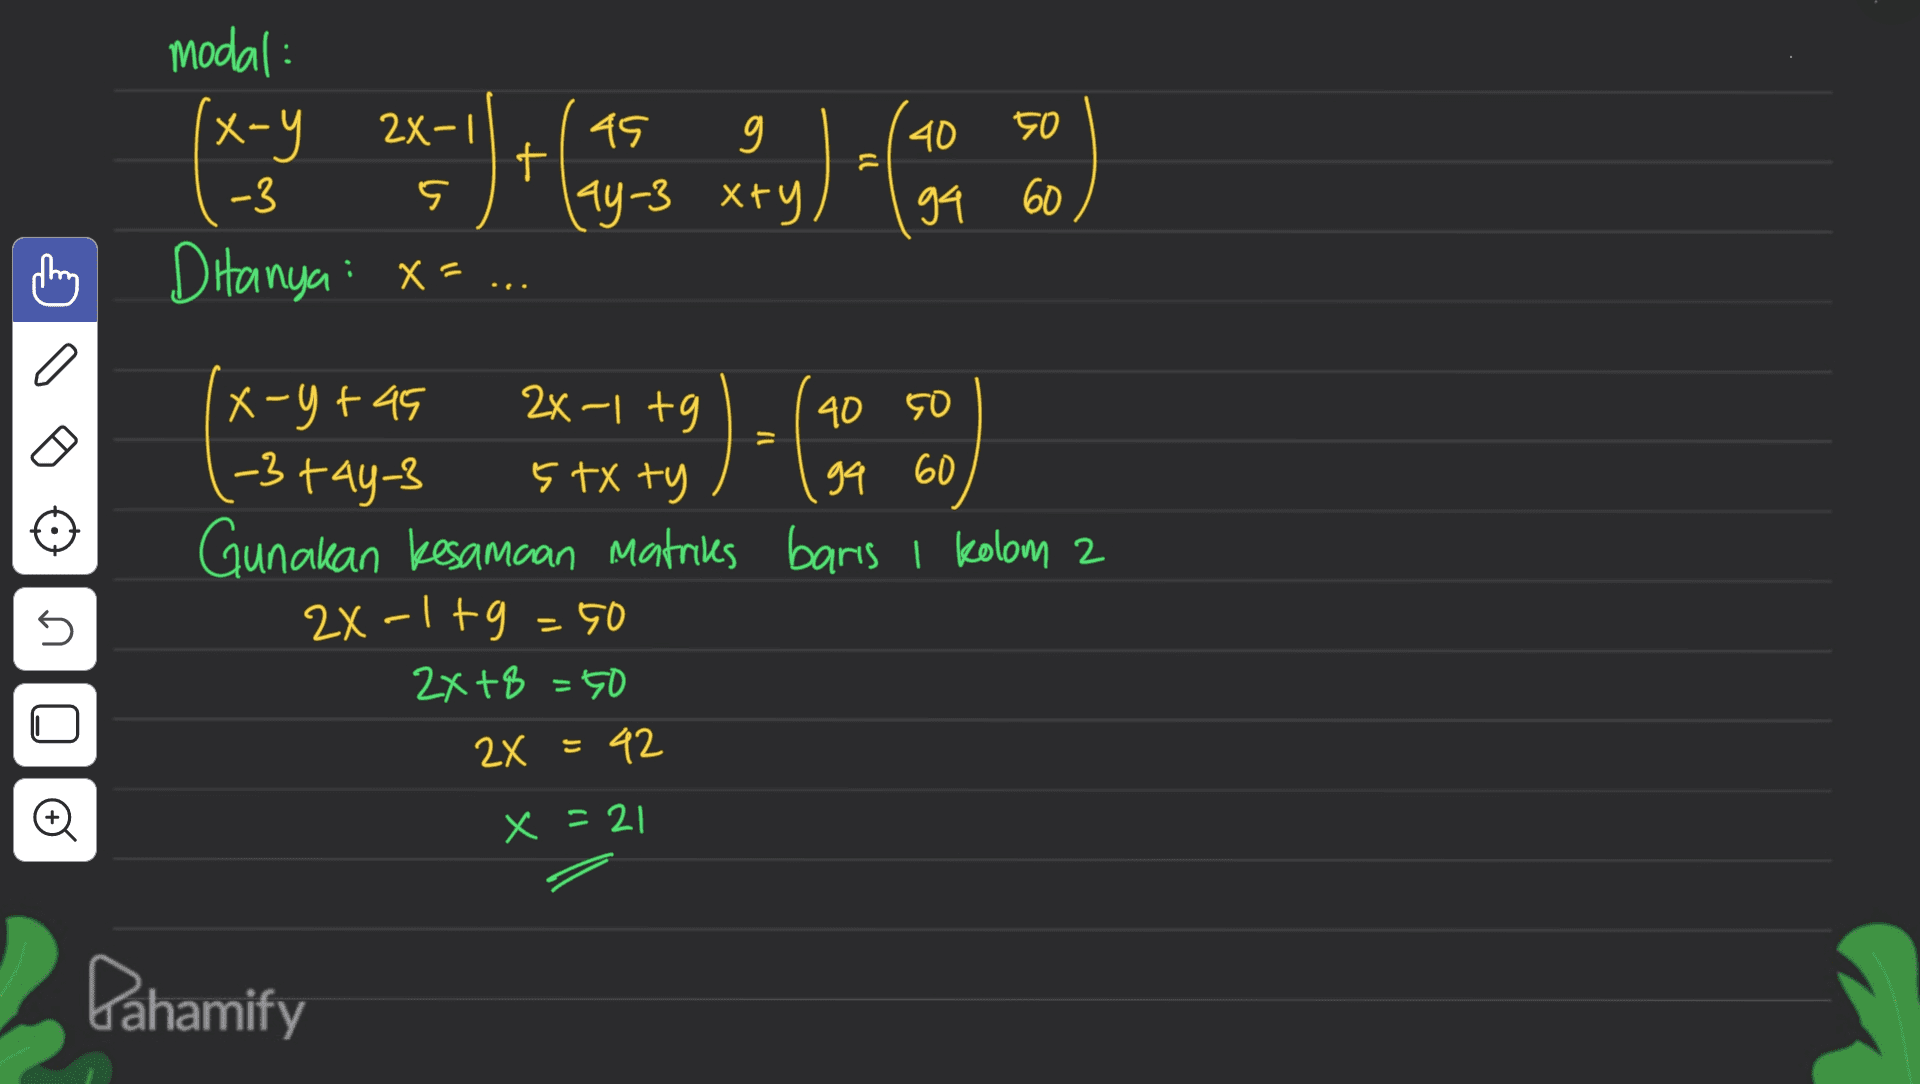 40 50 modal: (x-y 2x-1 t -3 Ditanya: X= ... 45 Ку -3 хғу 5 94 60 a 40 50 2X-1 to 5tX ty ga 60 x-y+45 (-3 tay-3 Gunakan kesamaan Matries baris I kolom 2 2X -1 +9 - 50 45 2x+8 =50 2x = 42 © x =21 Pahamify 